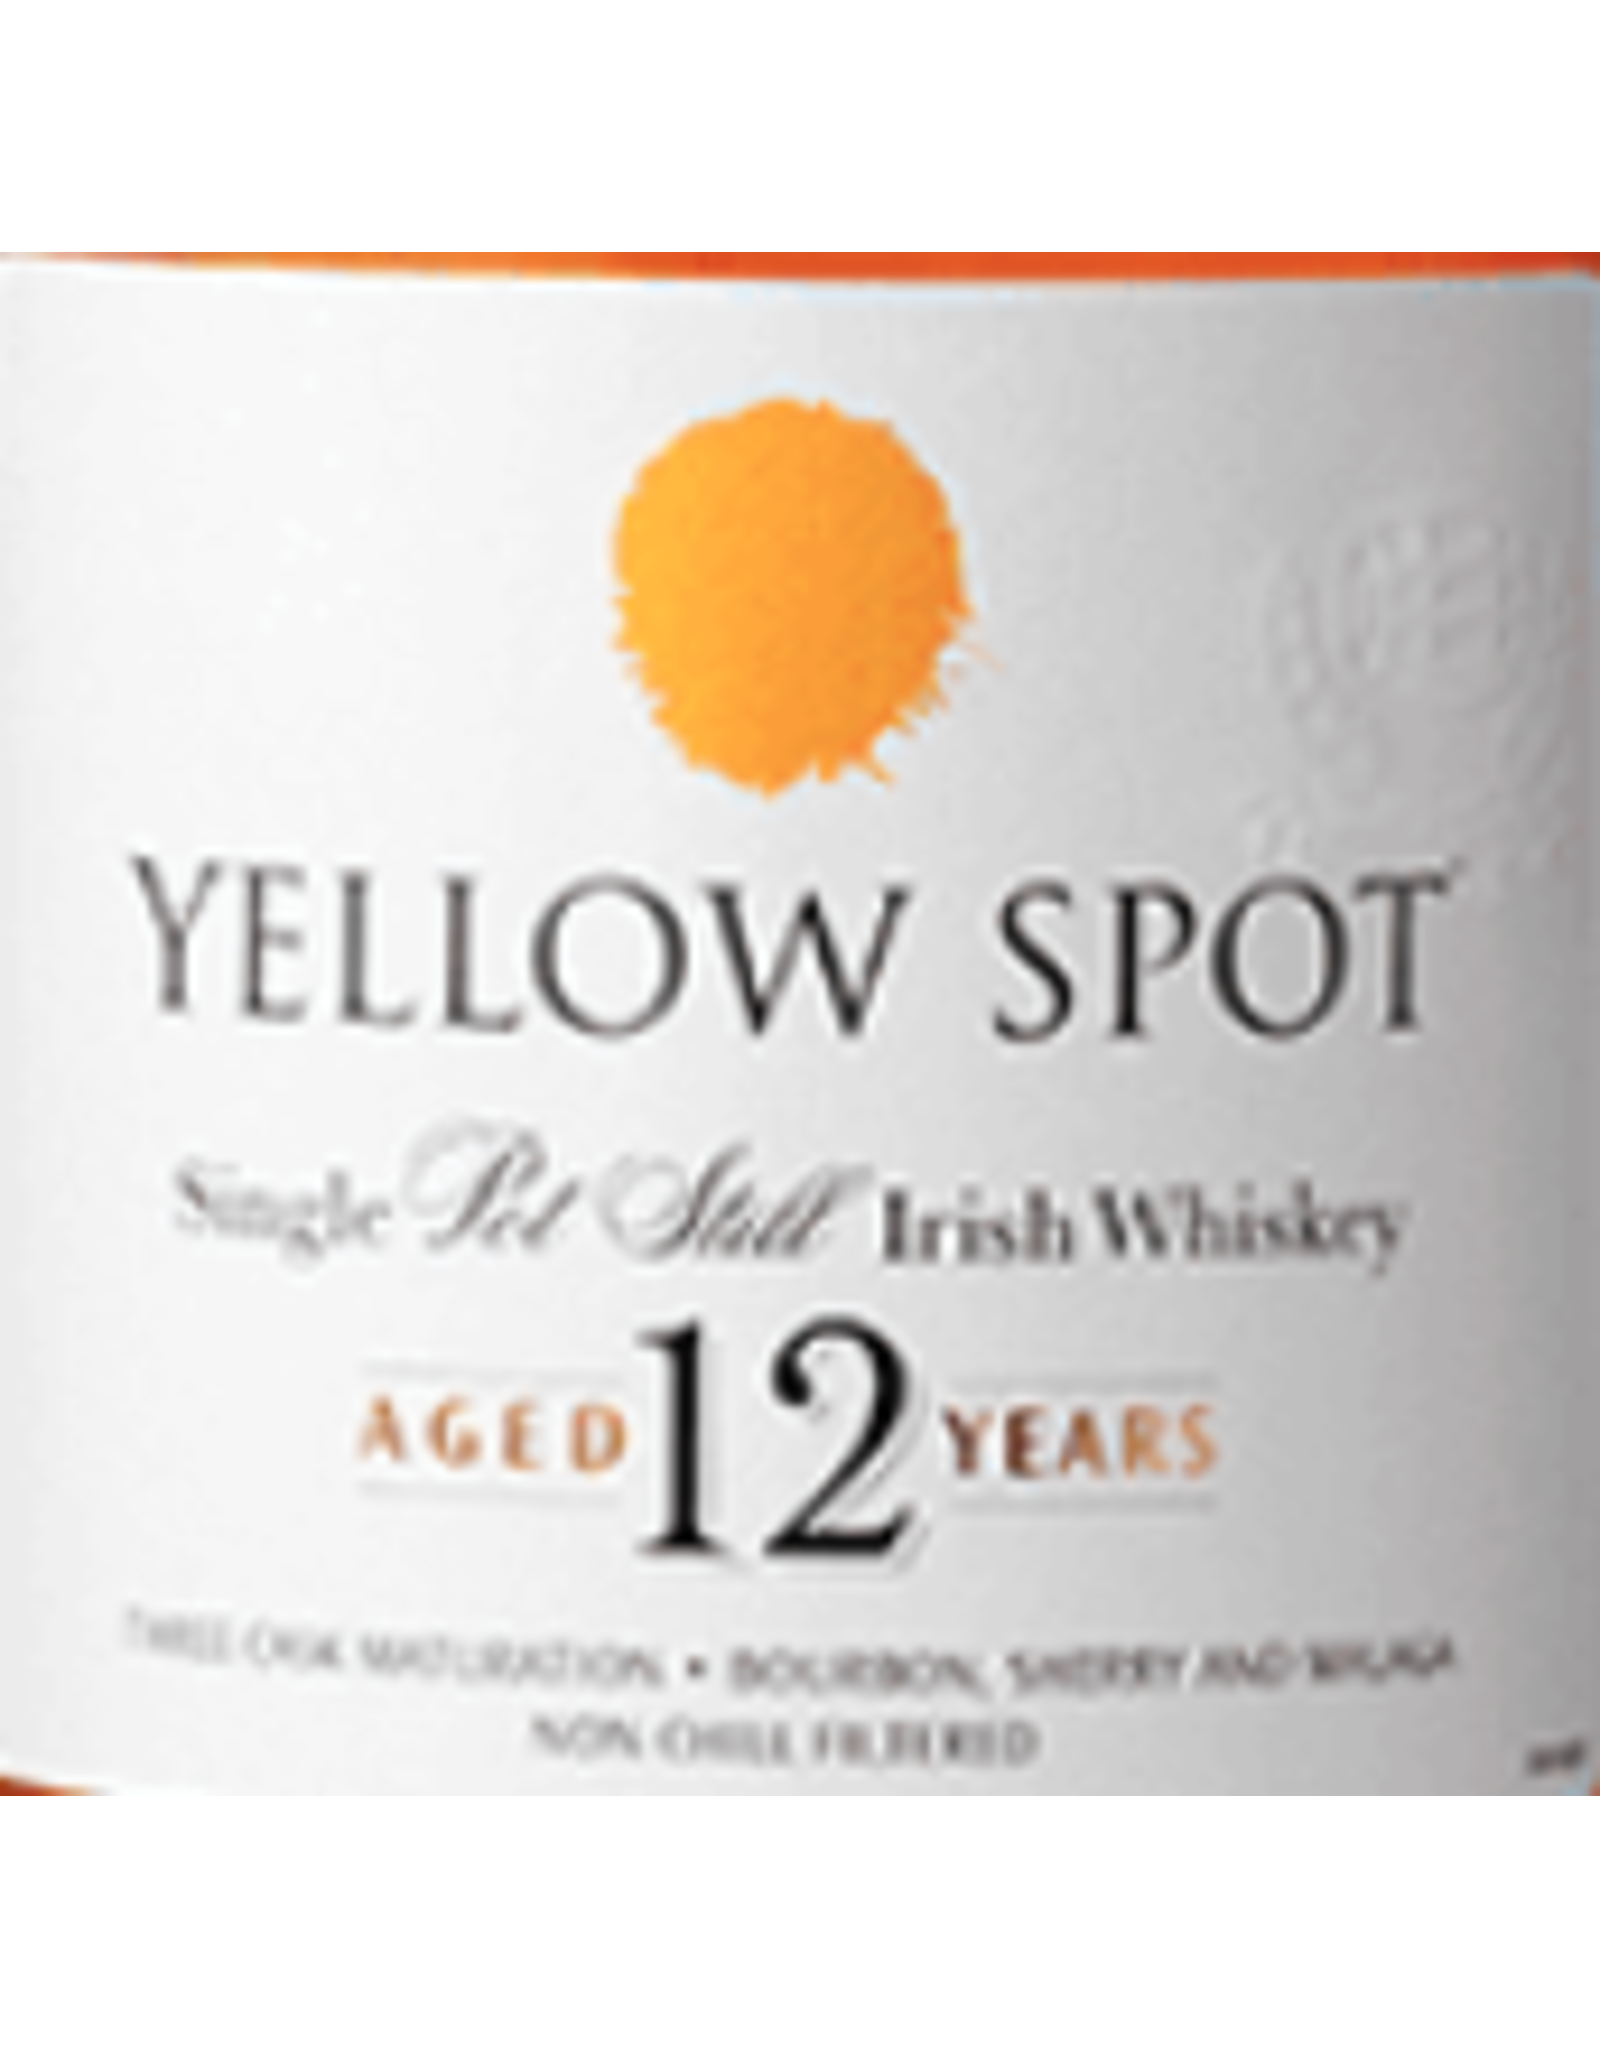 The Spot Yellow Spot Single Pot Still  Irish Whiskey 12Yr